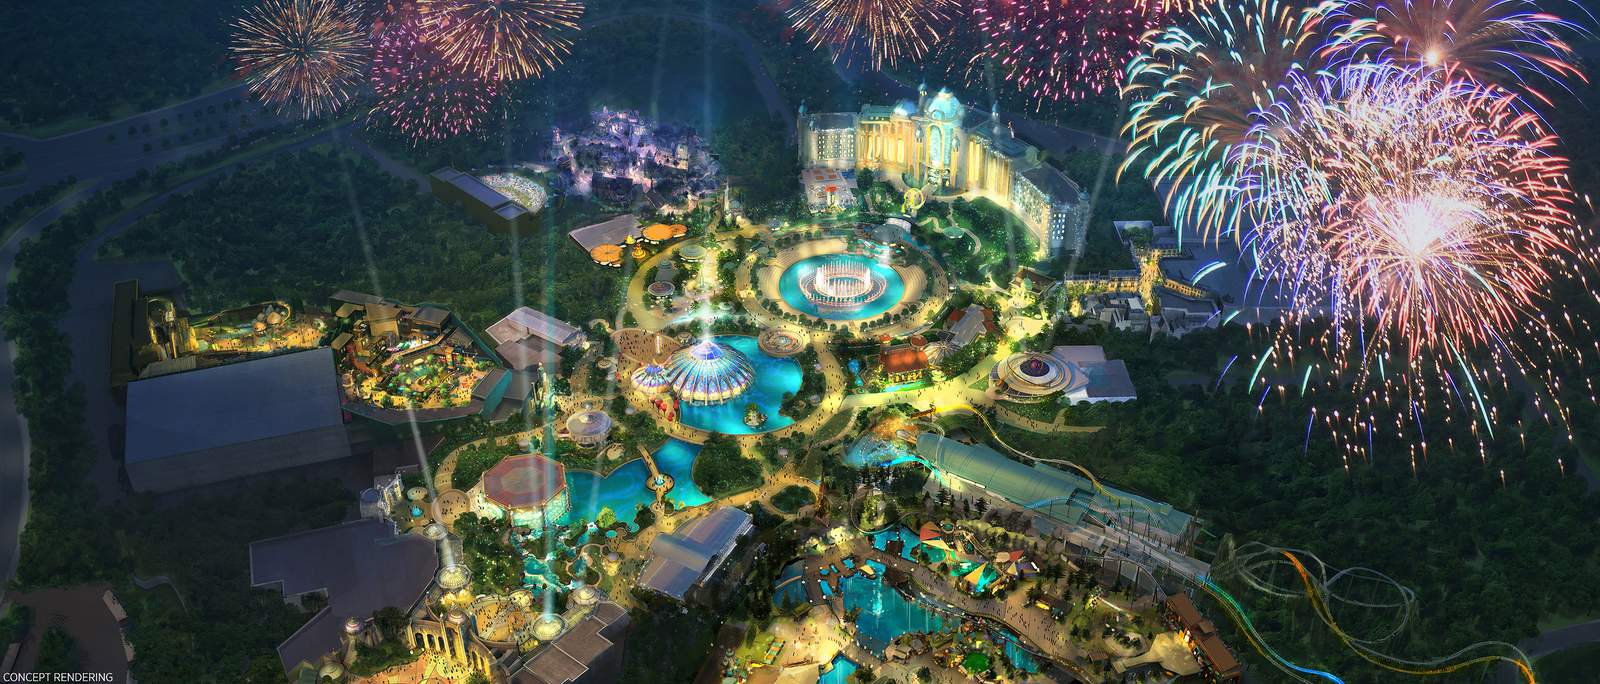 Universal Orlando resumes work on Epic Universe, resort’s 4th theme park